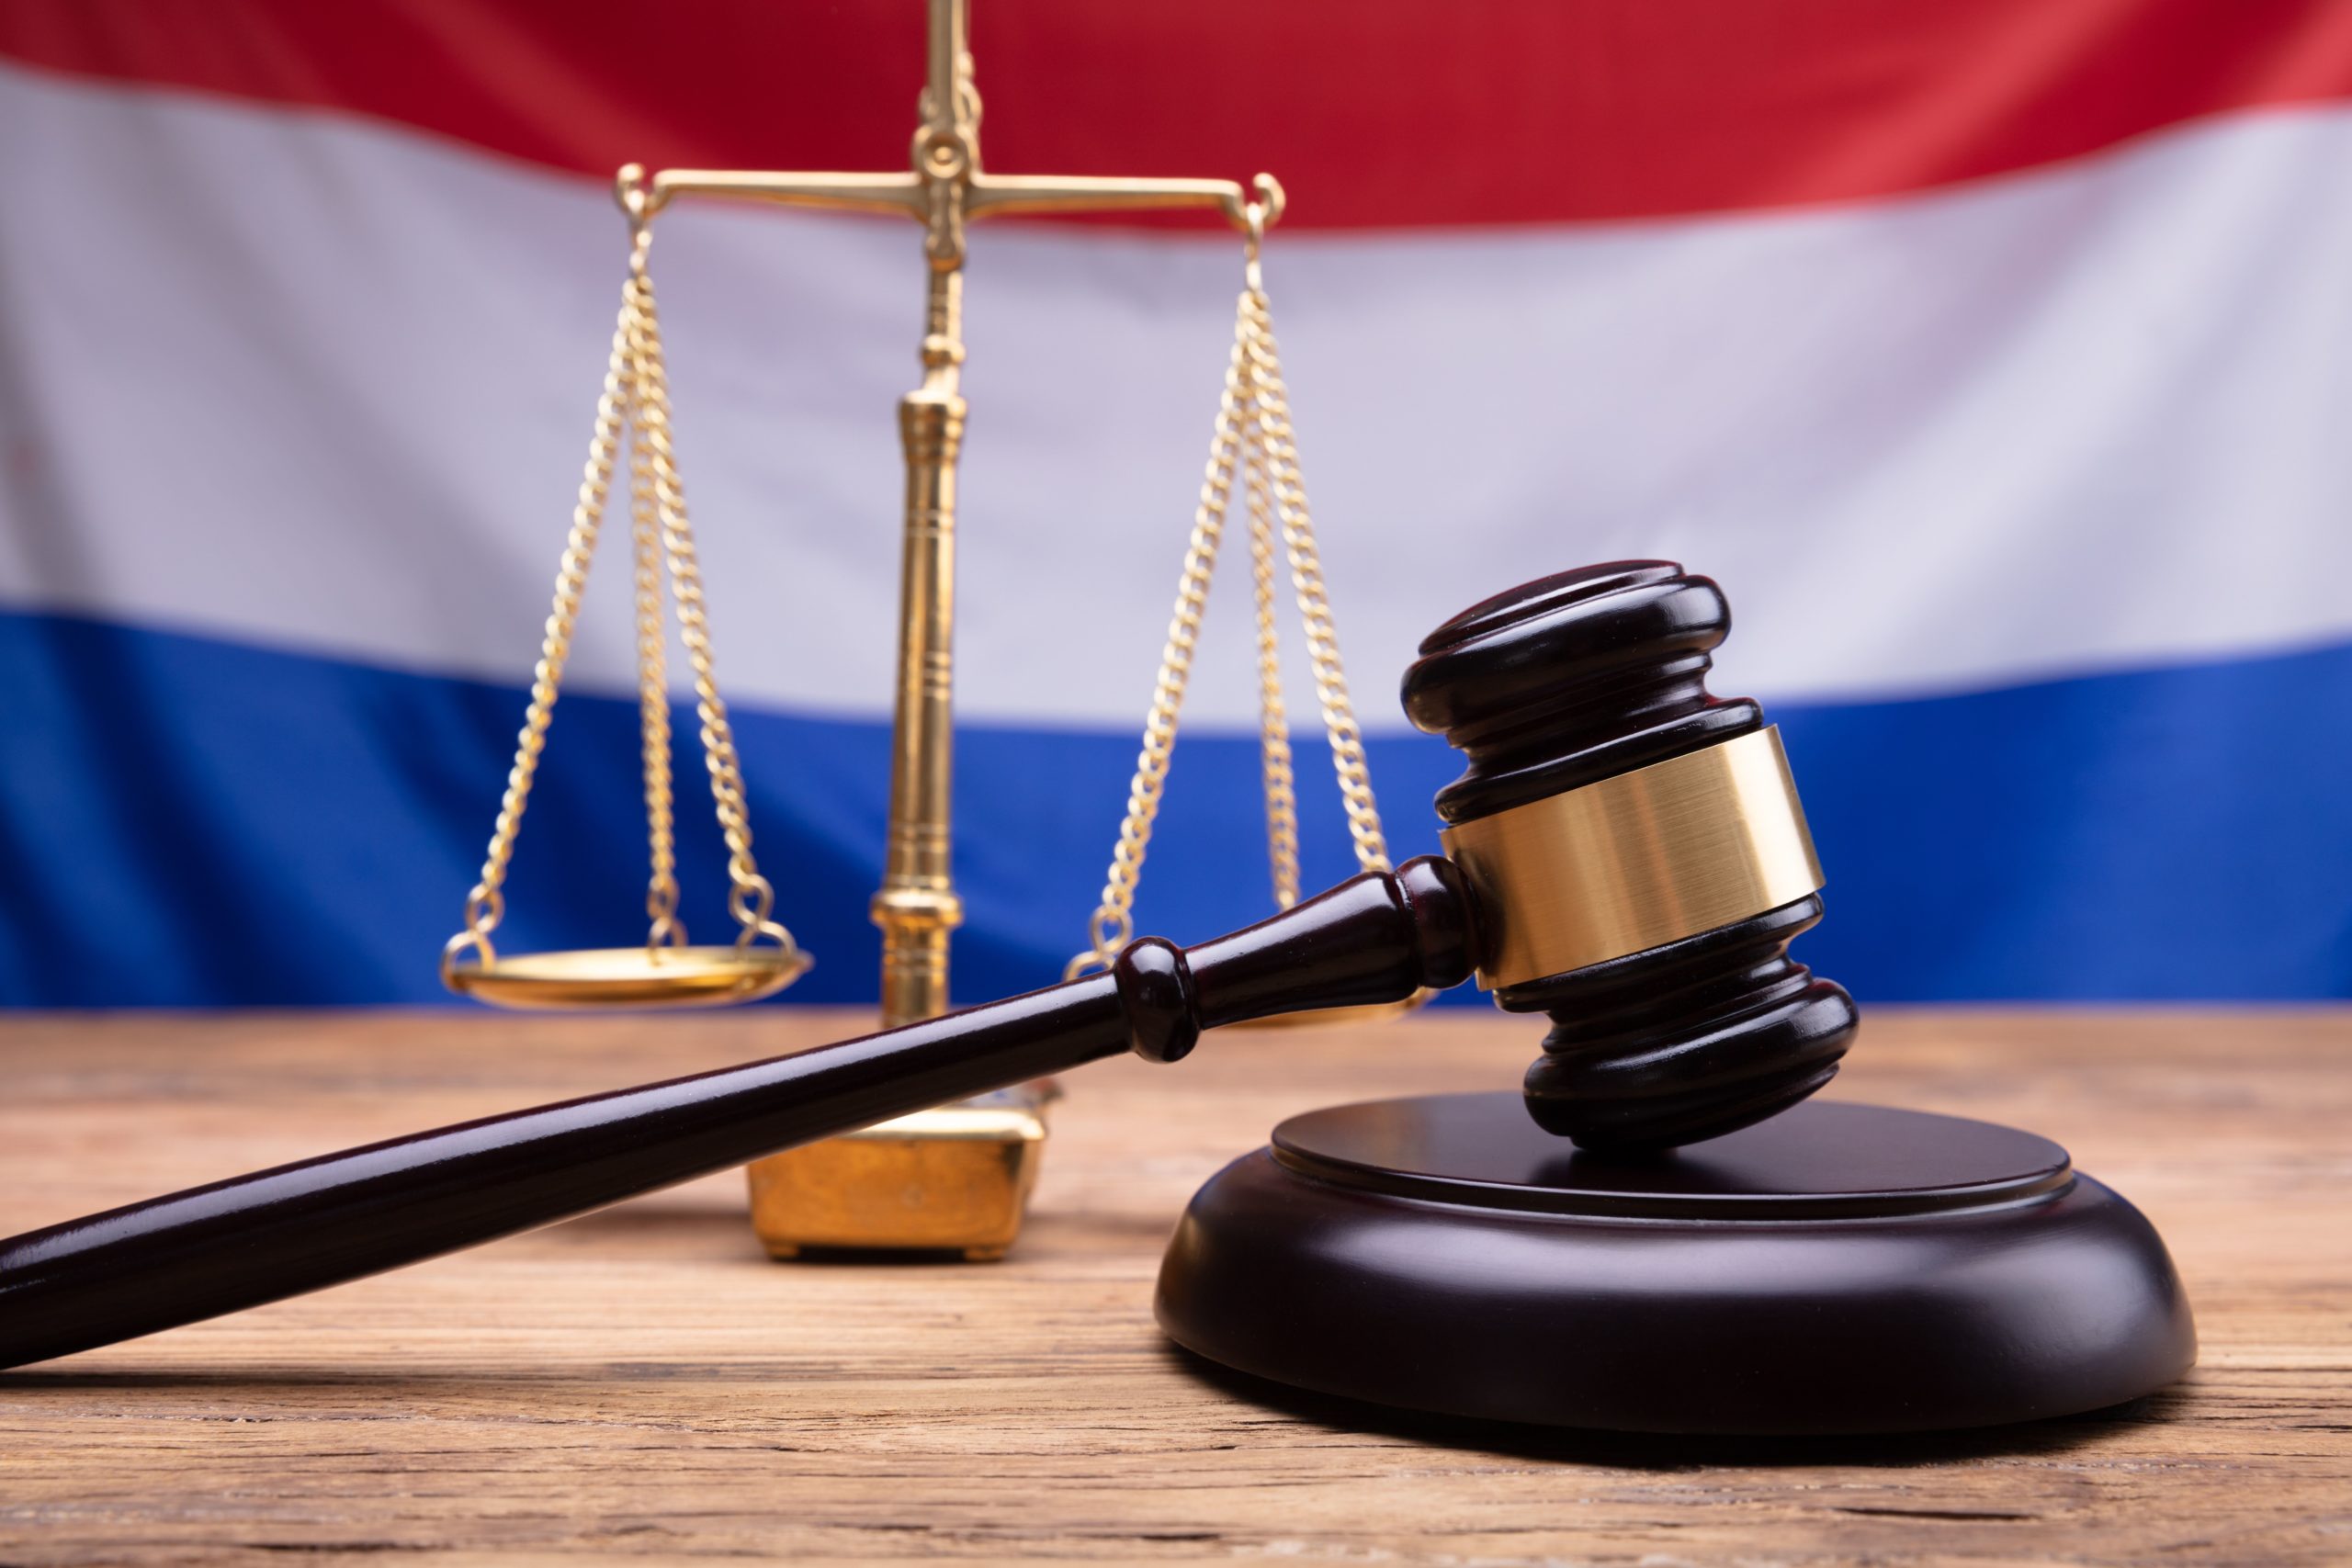 module publiekrecht basistheorie vastgoeddeskundige nederlandse vlag, hamer, weegschaal